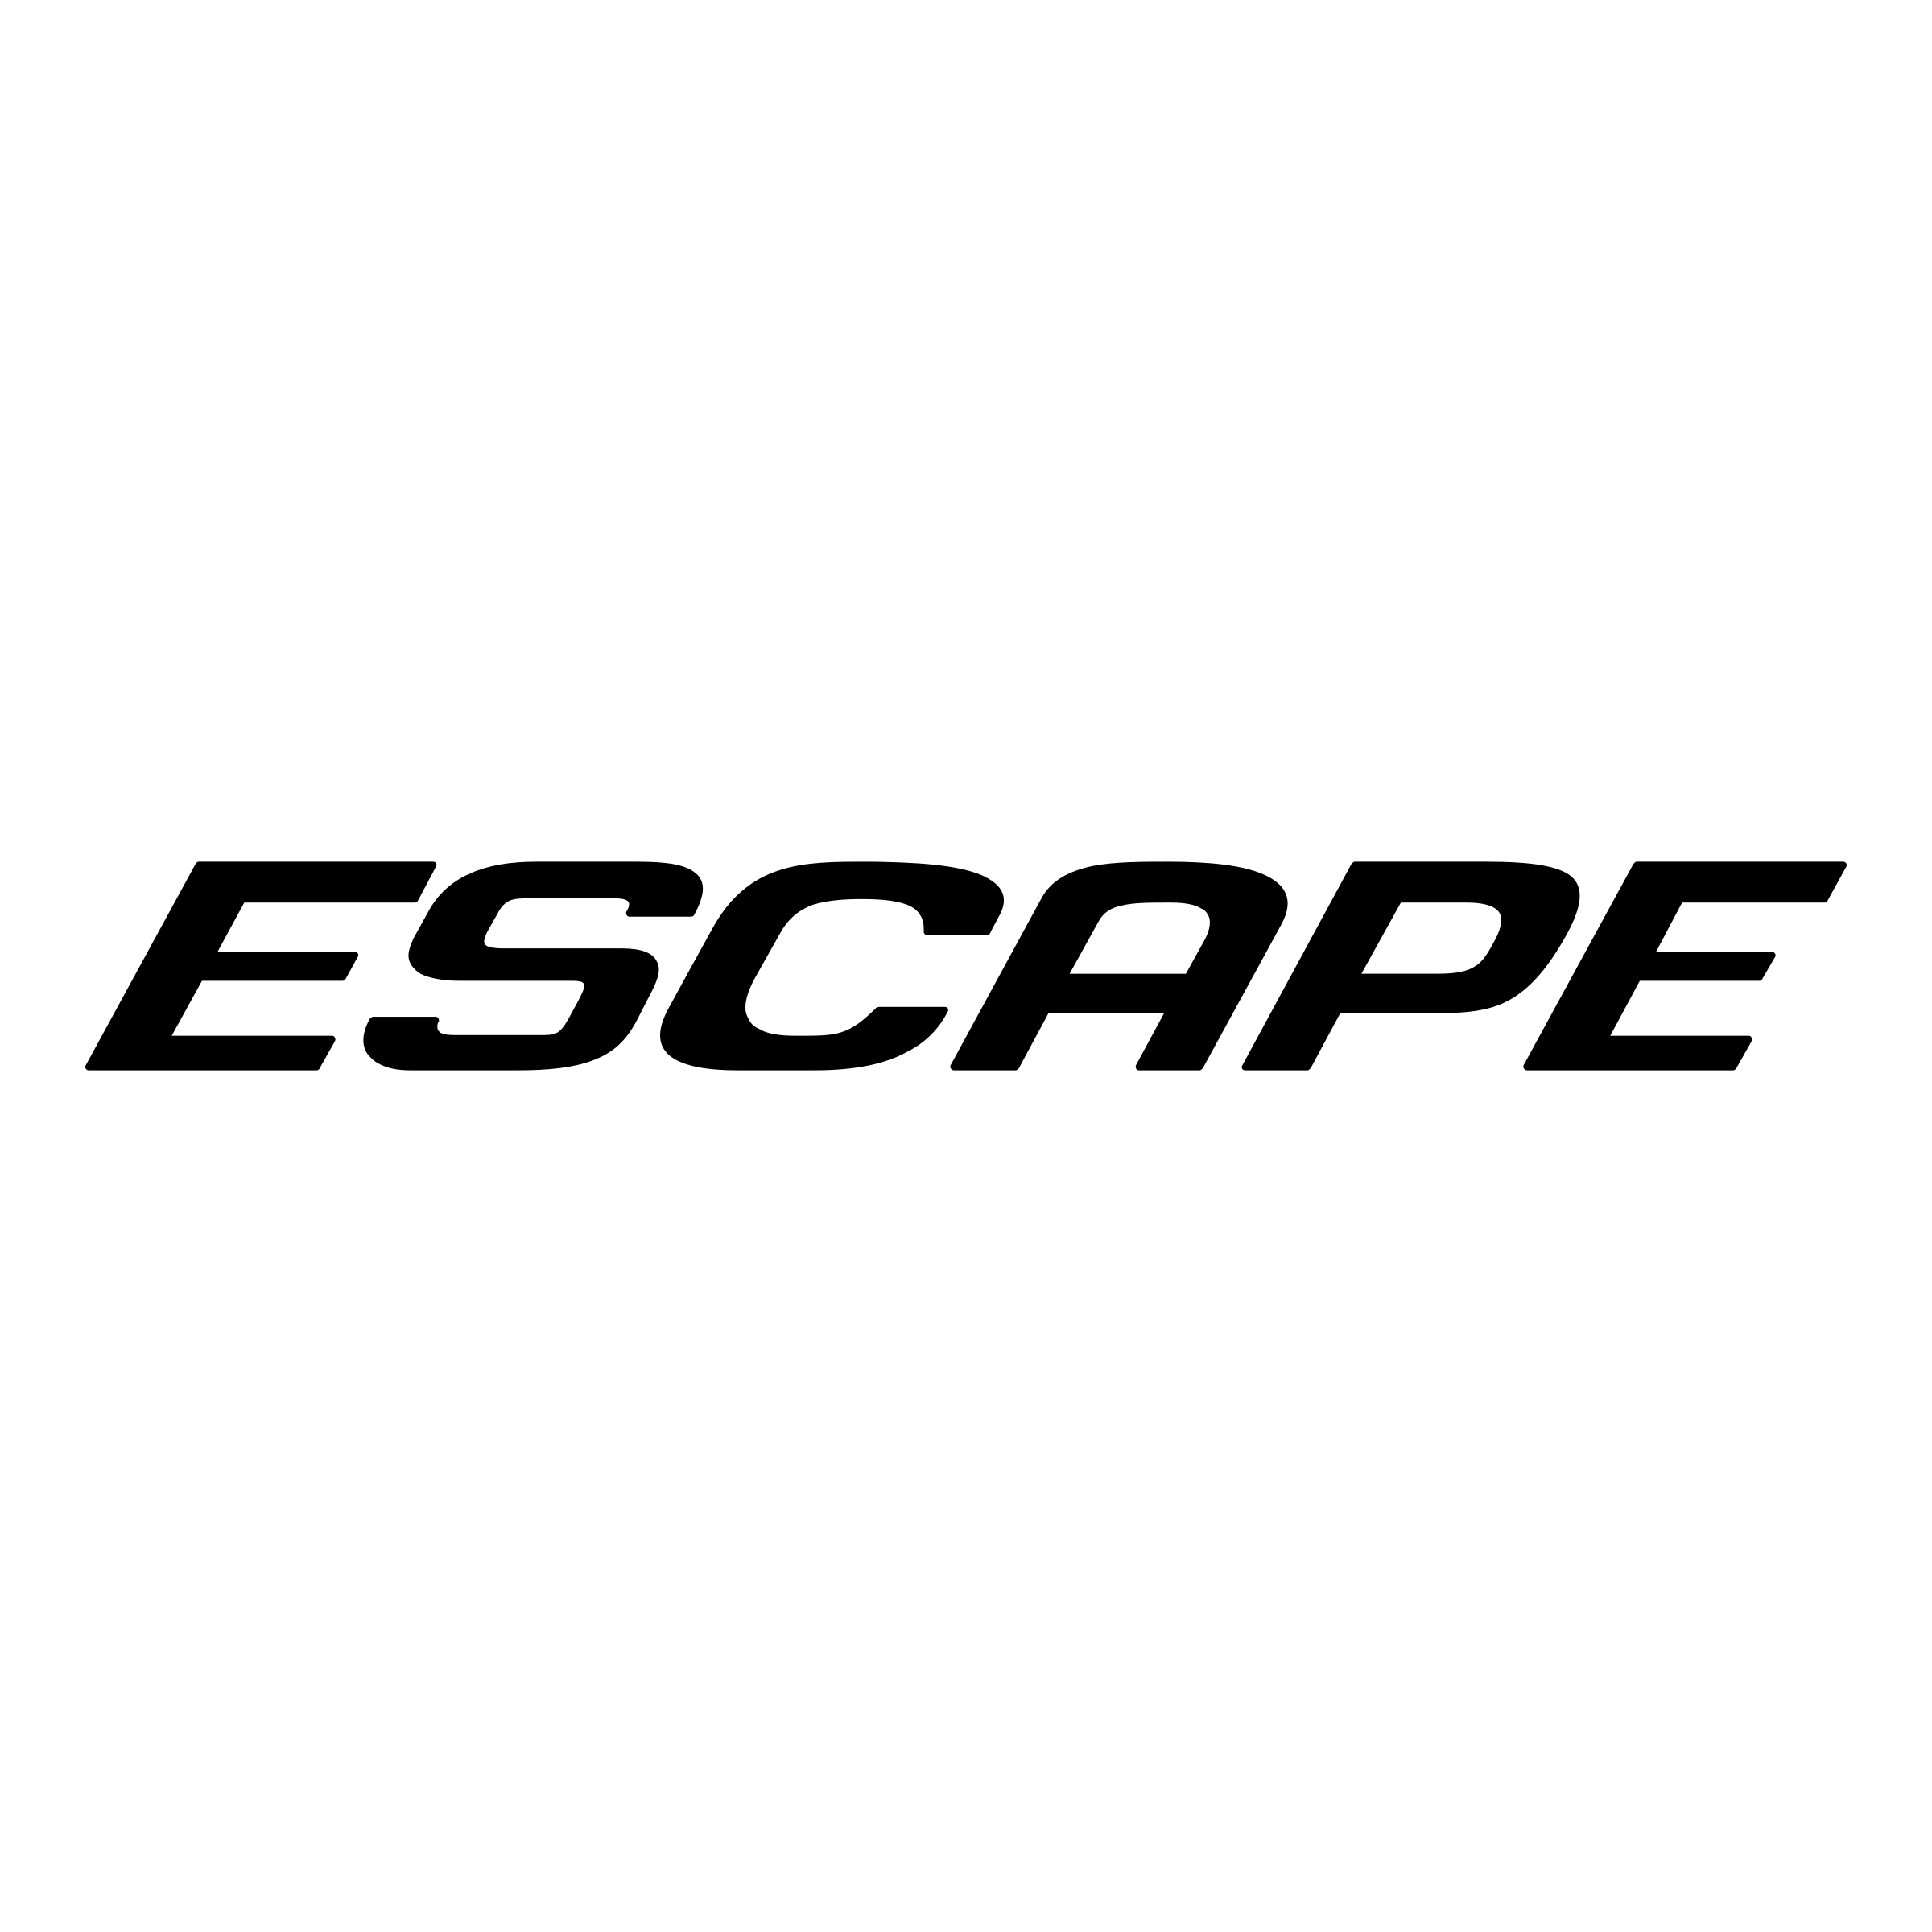 Escape Logo - Escape Logo PNG Transparent & SVG Vector